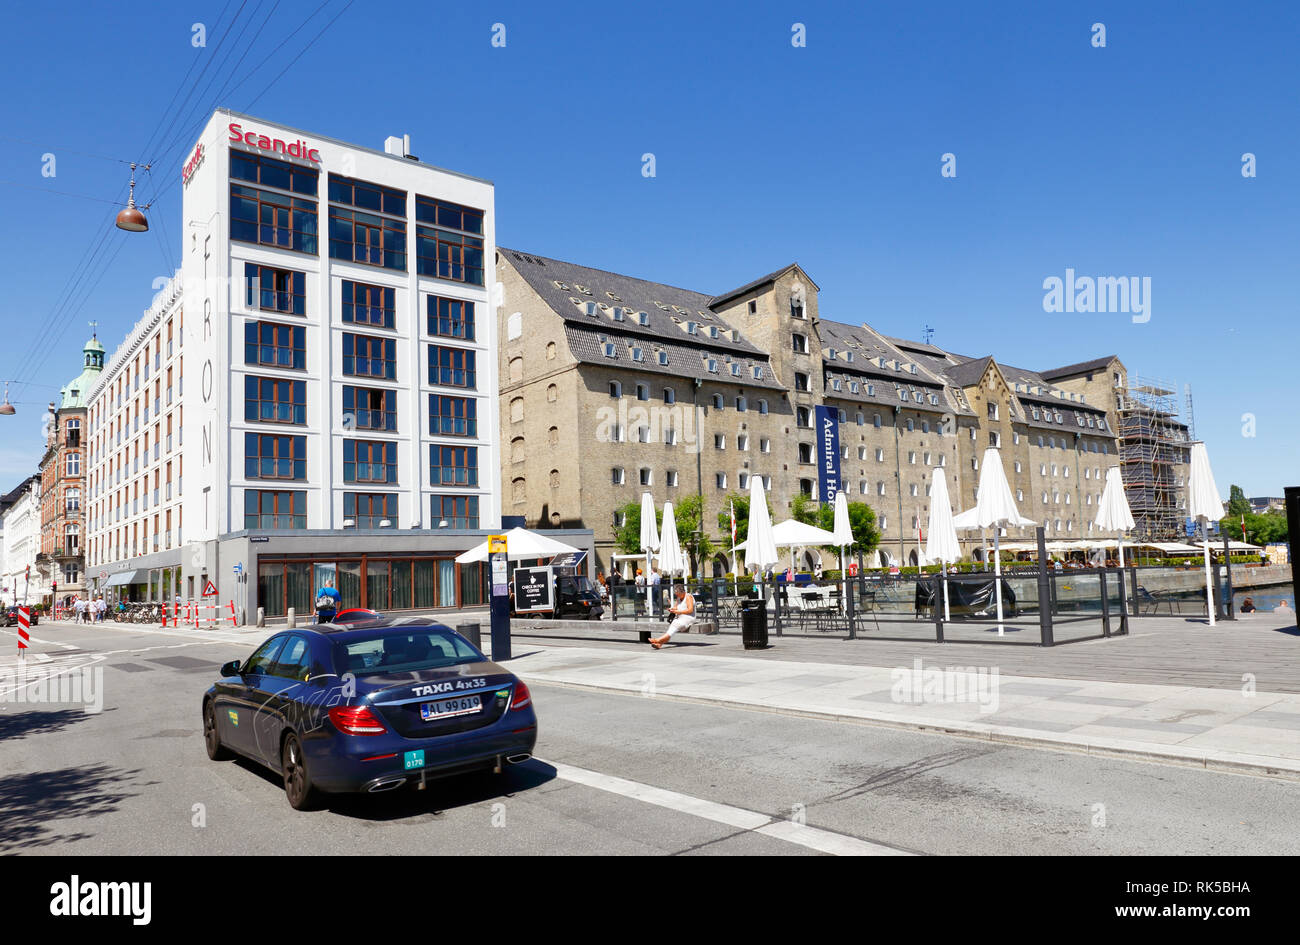 Copenhagen, Denmark - June 27, 2018: The Scandic hotel front and Hotel Admiral Stock Photo